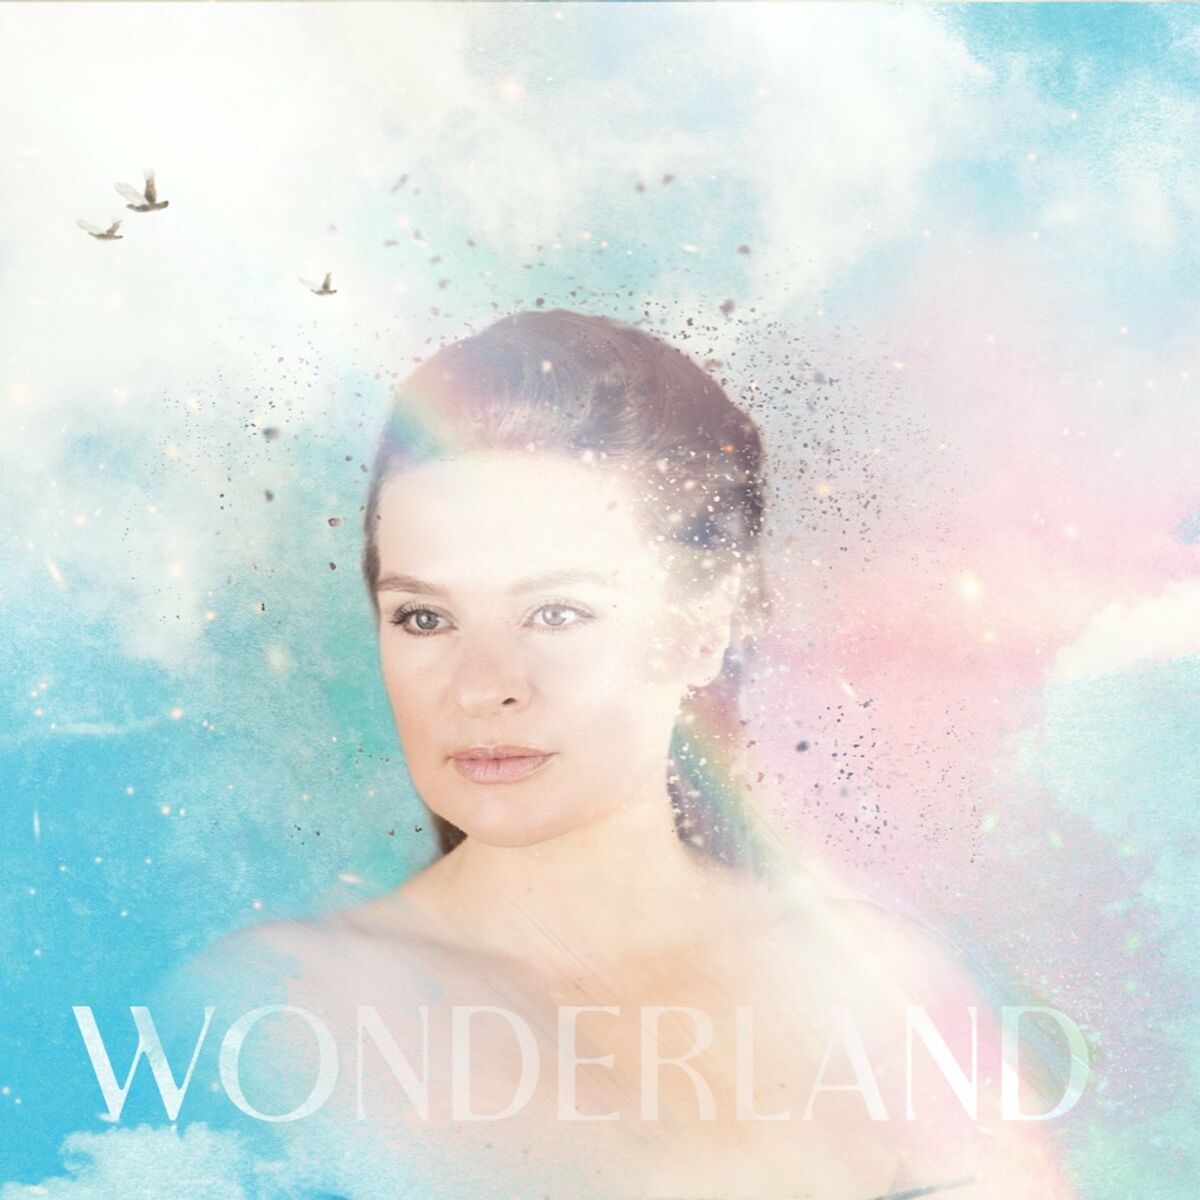 Sandra Van Nieuwland - Wonderland (2022)